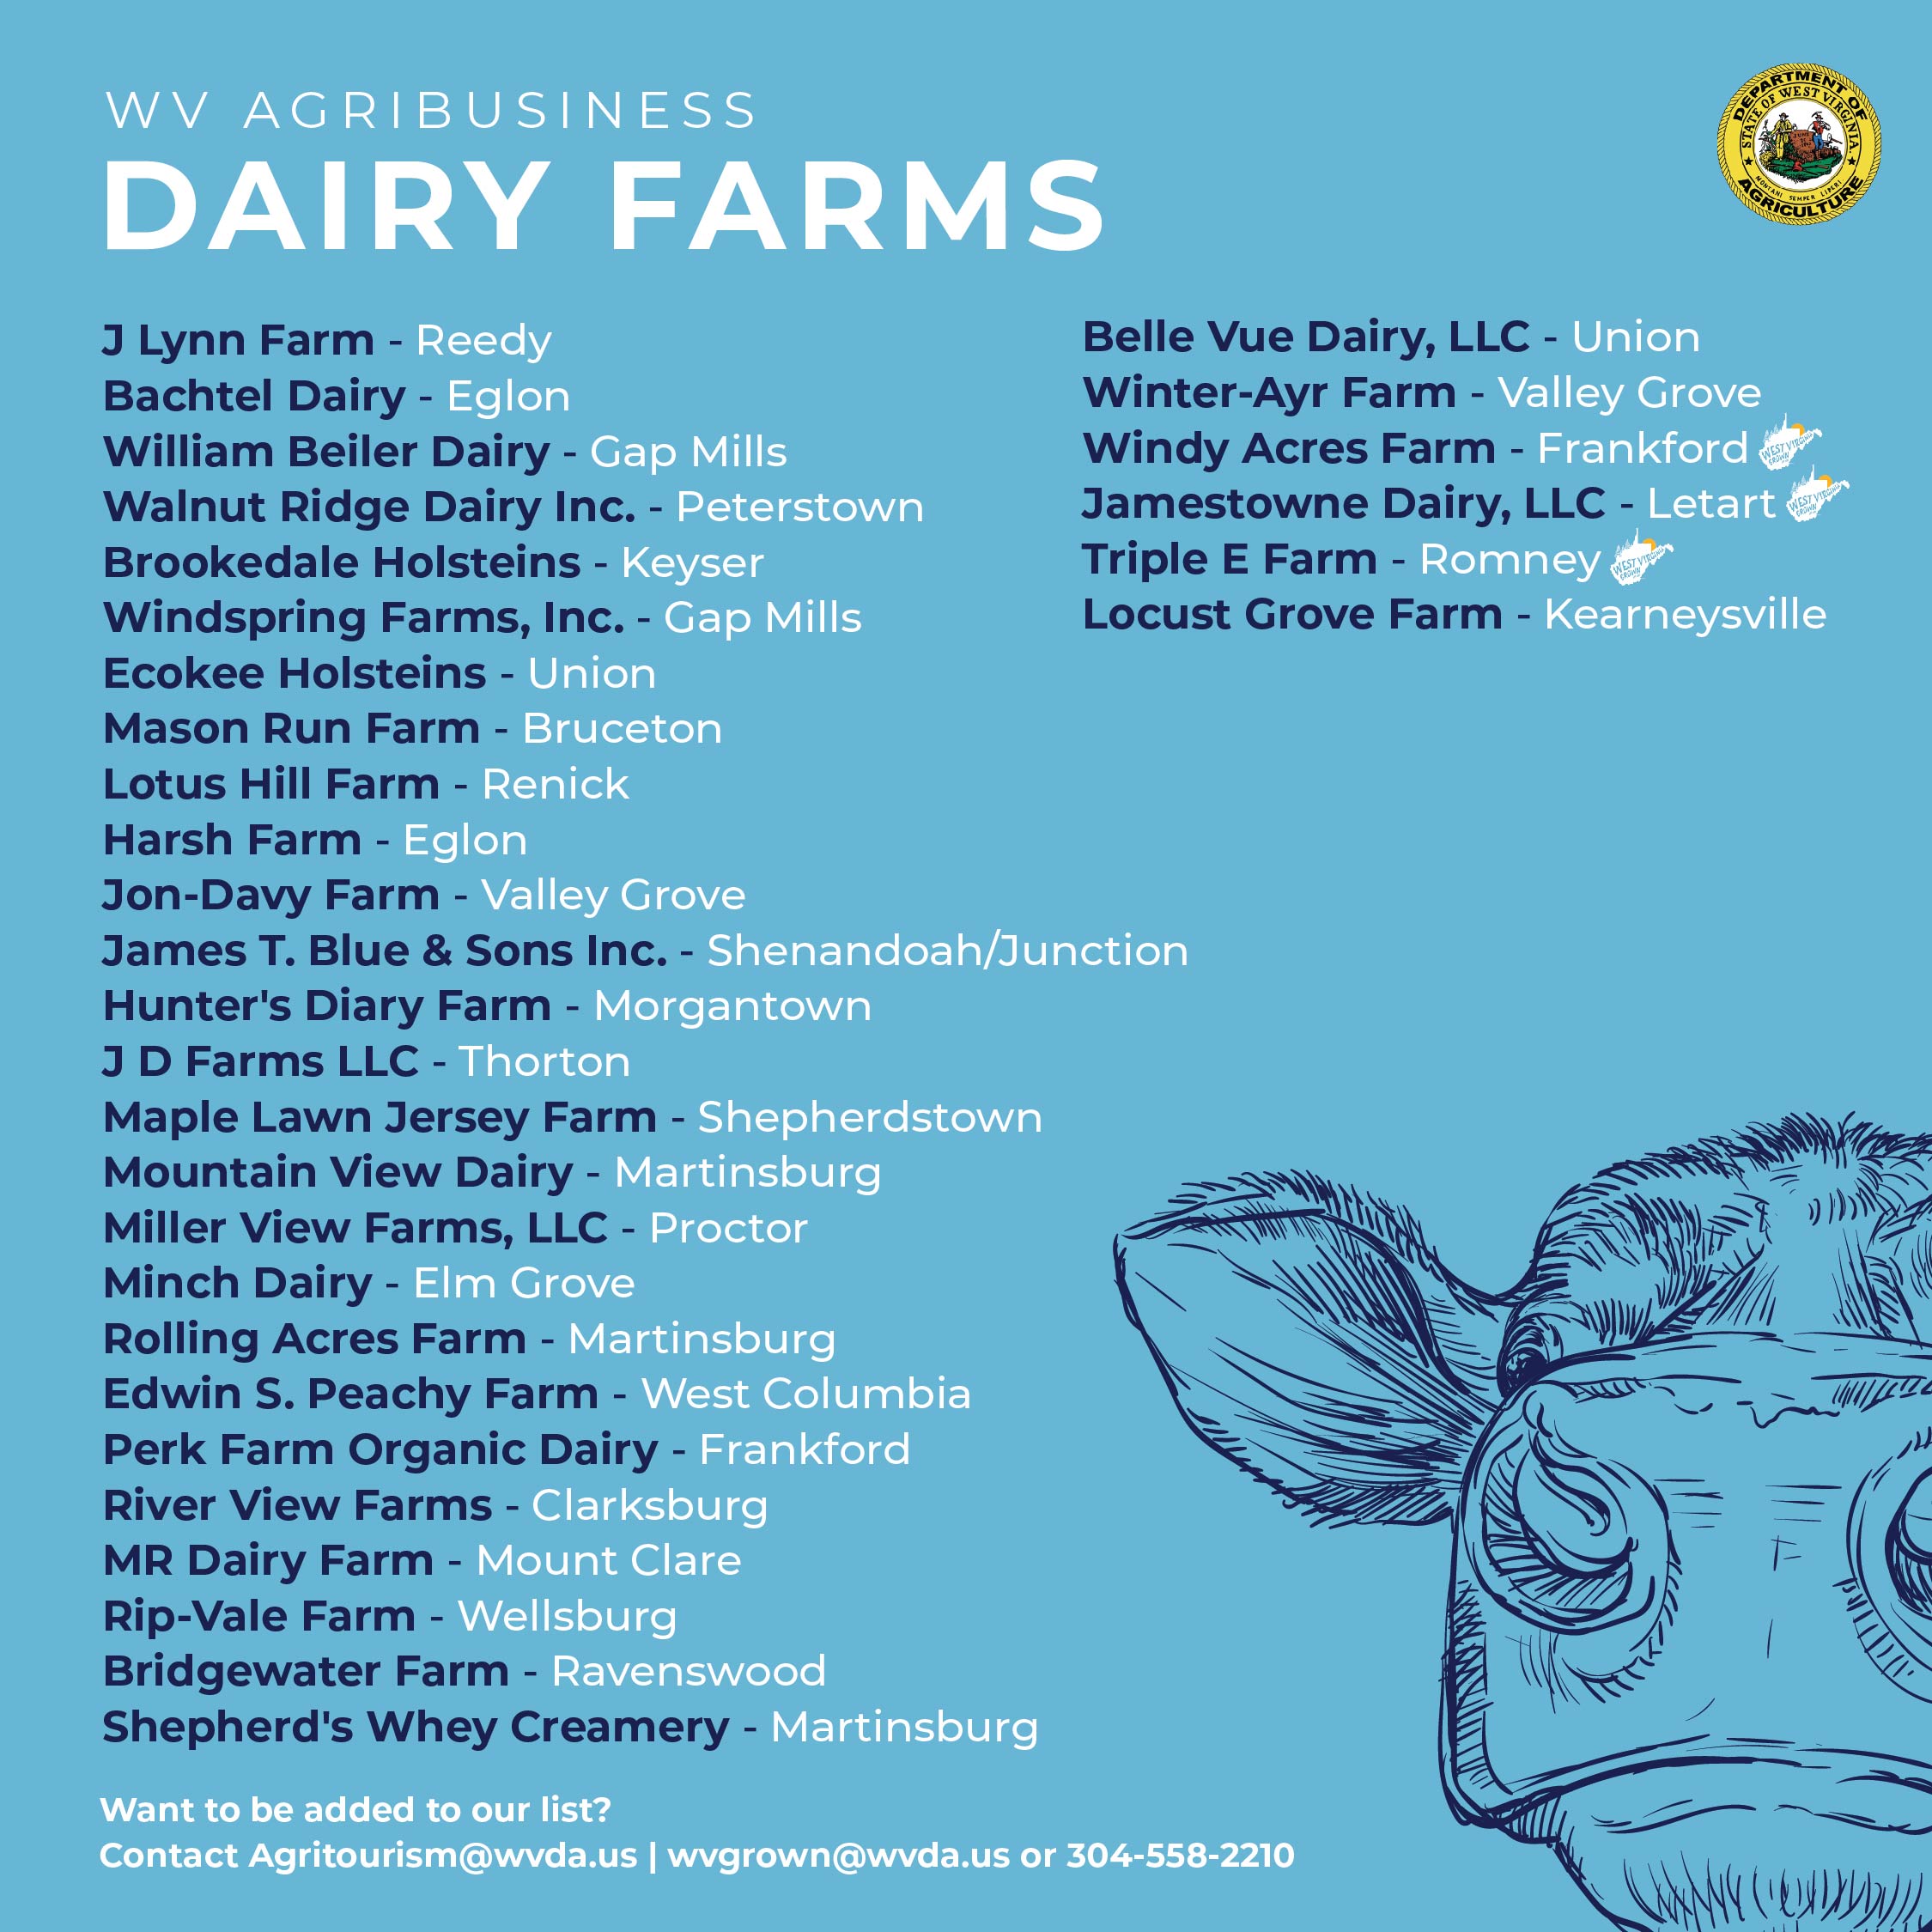 WV Agribusiness Dairy Farm List